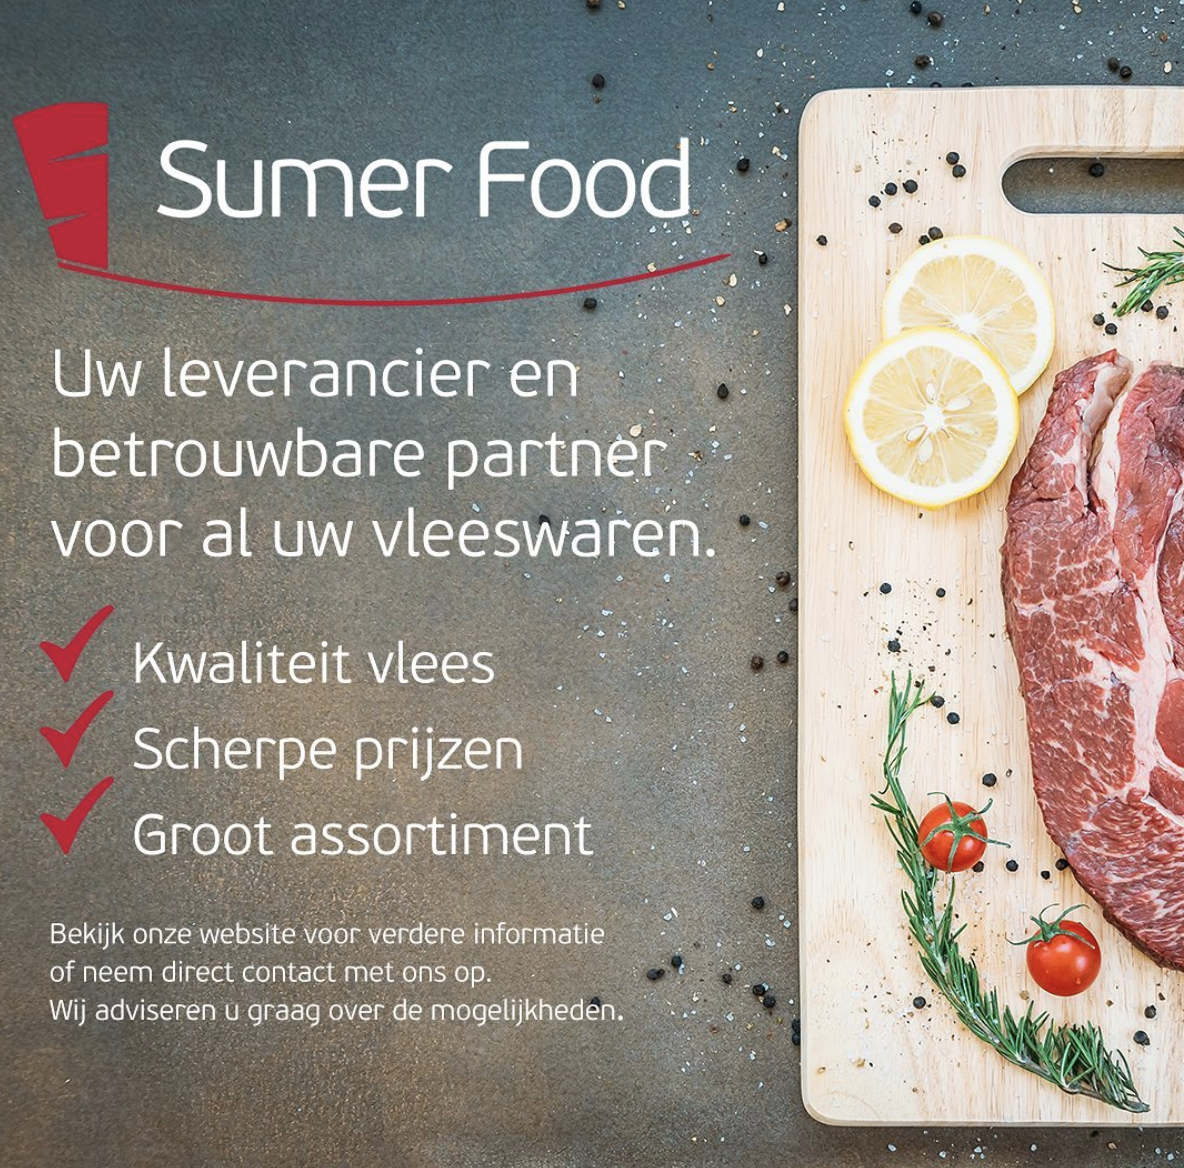 SUMER FOOD AMSTERDAM